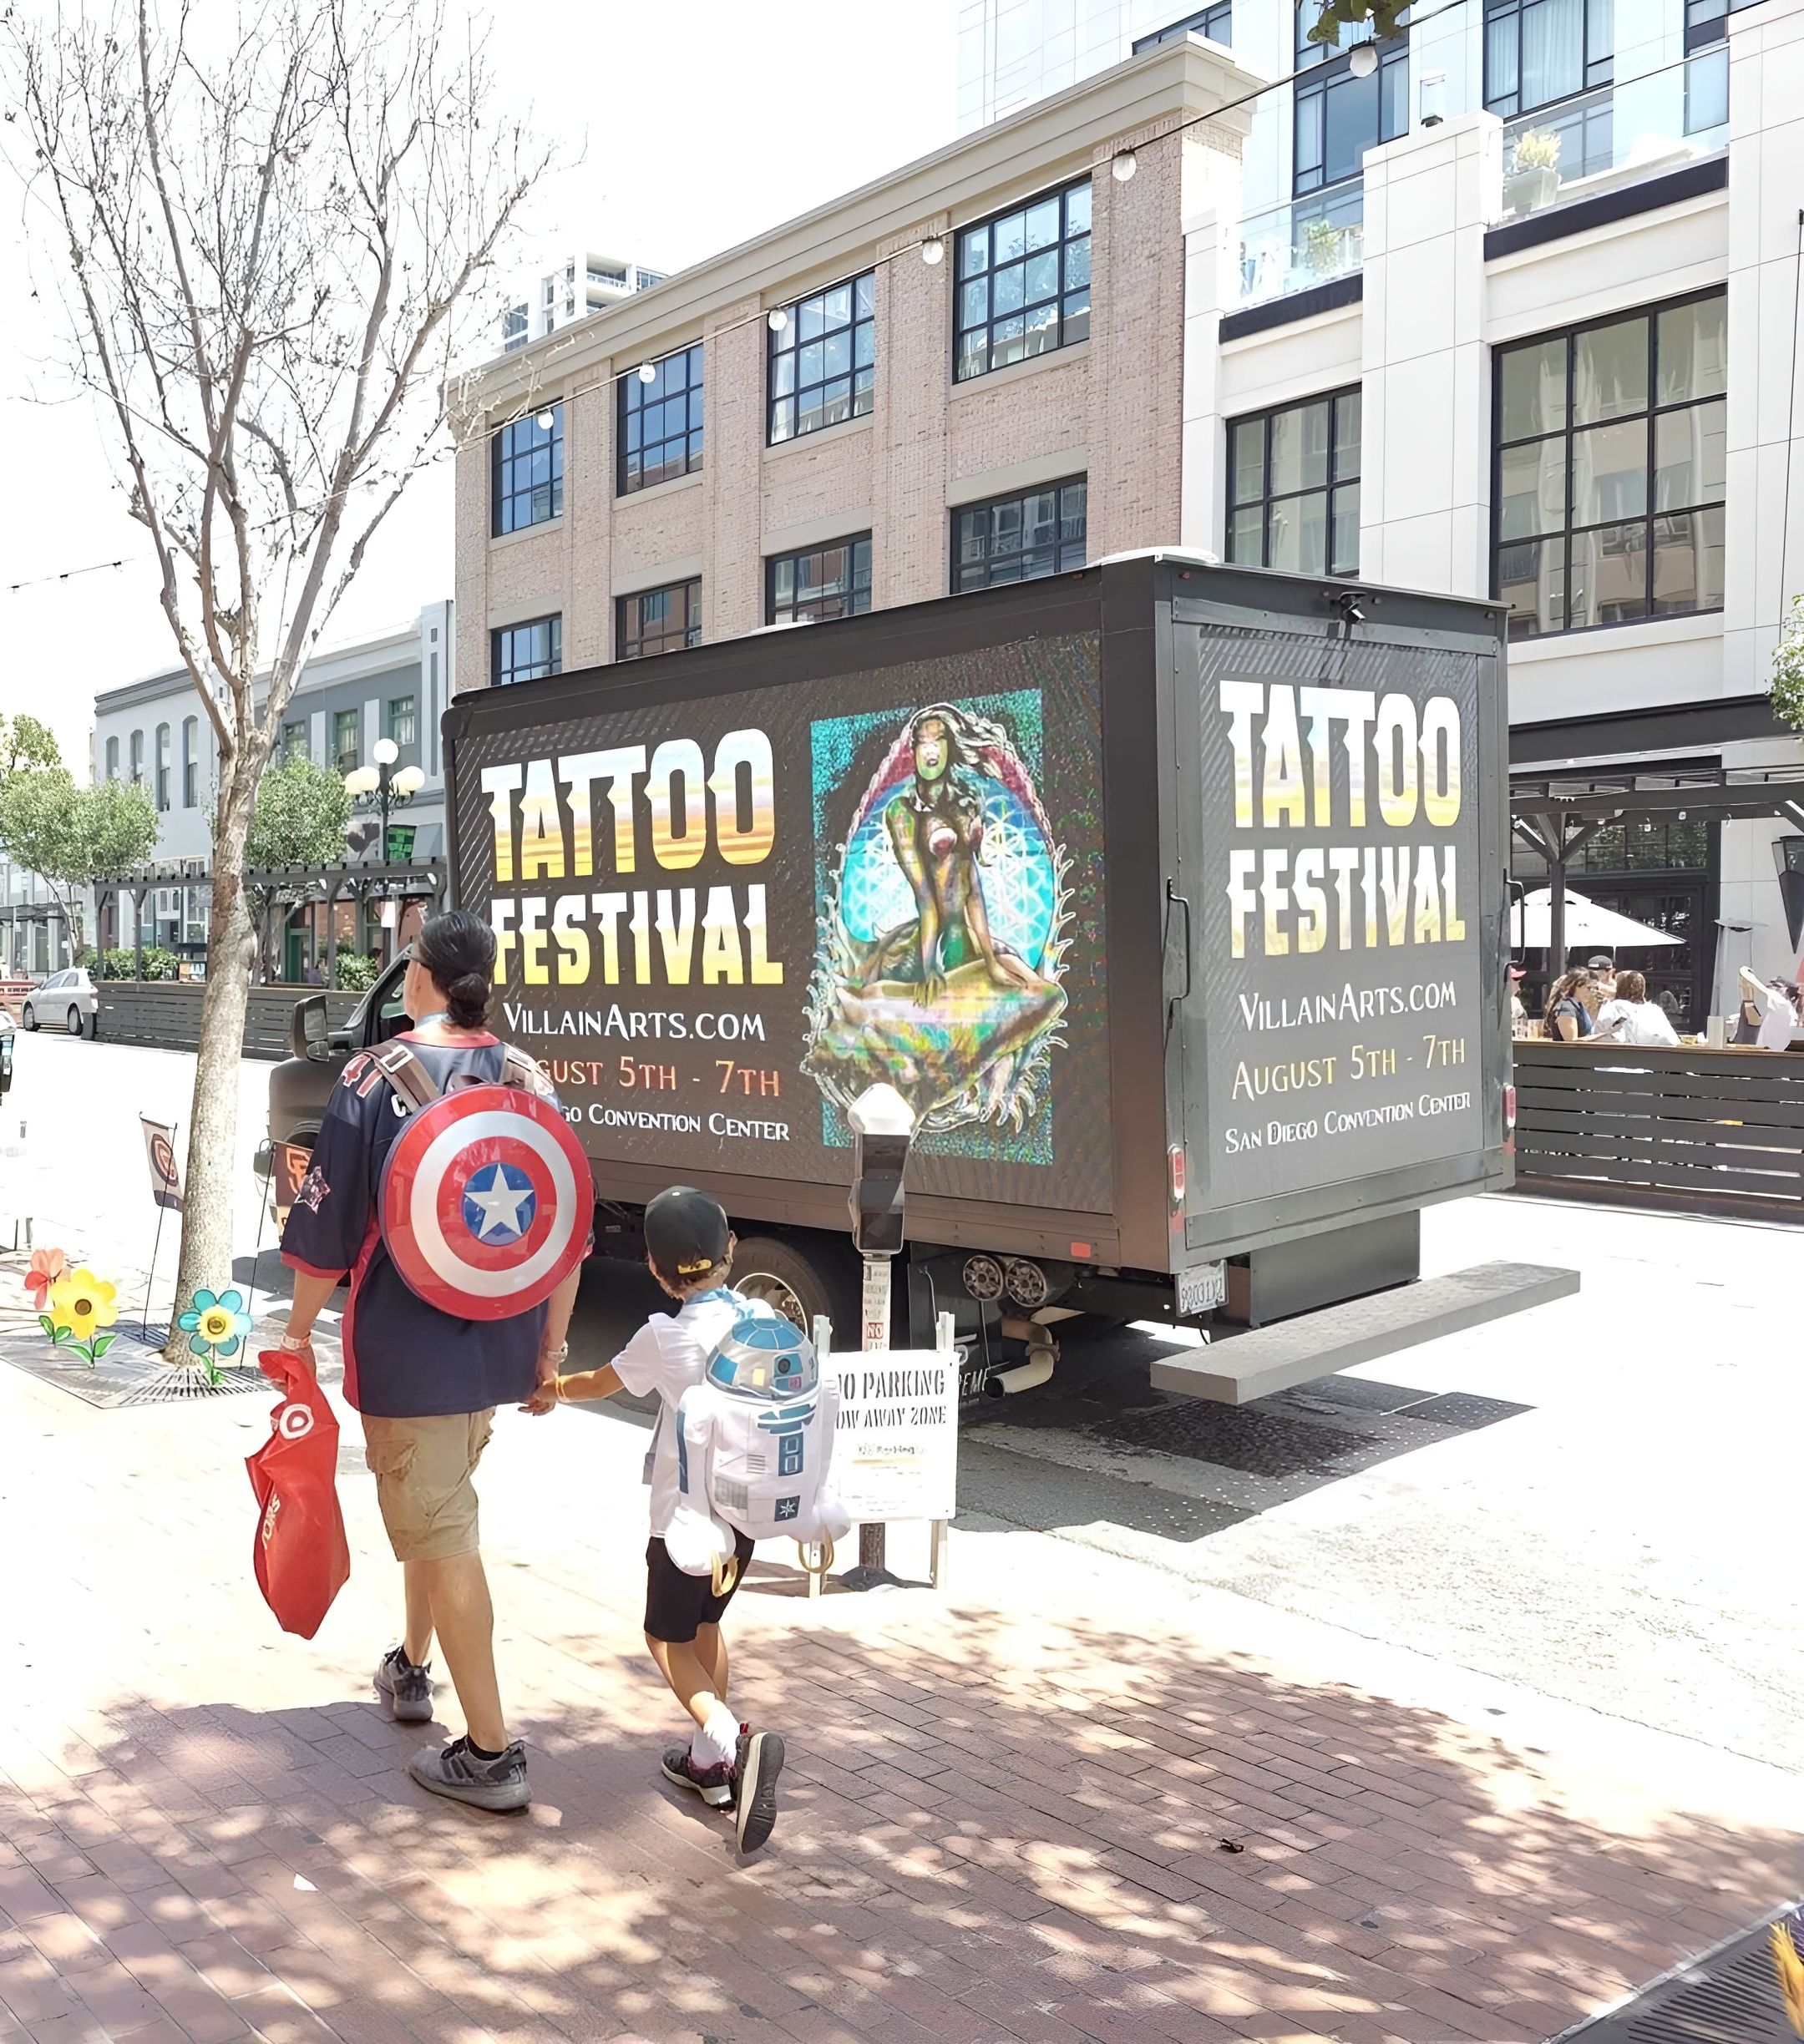 Mobile digital billboard circling a local tattoo festival